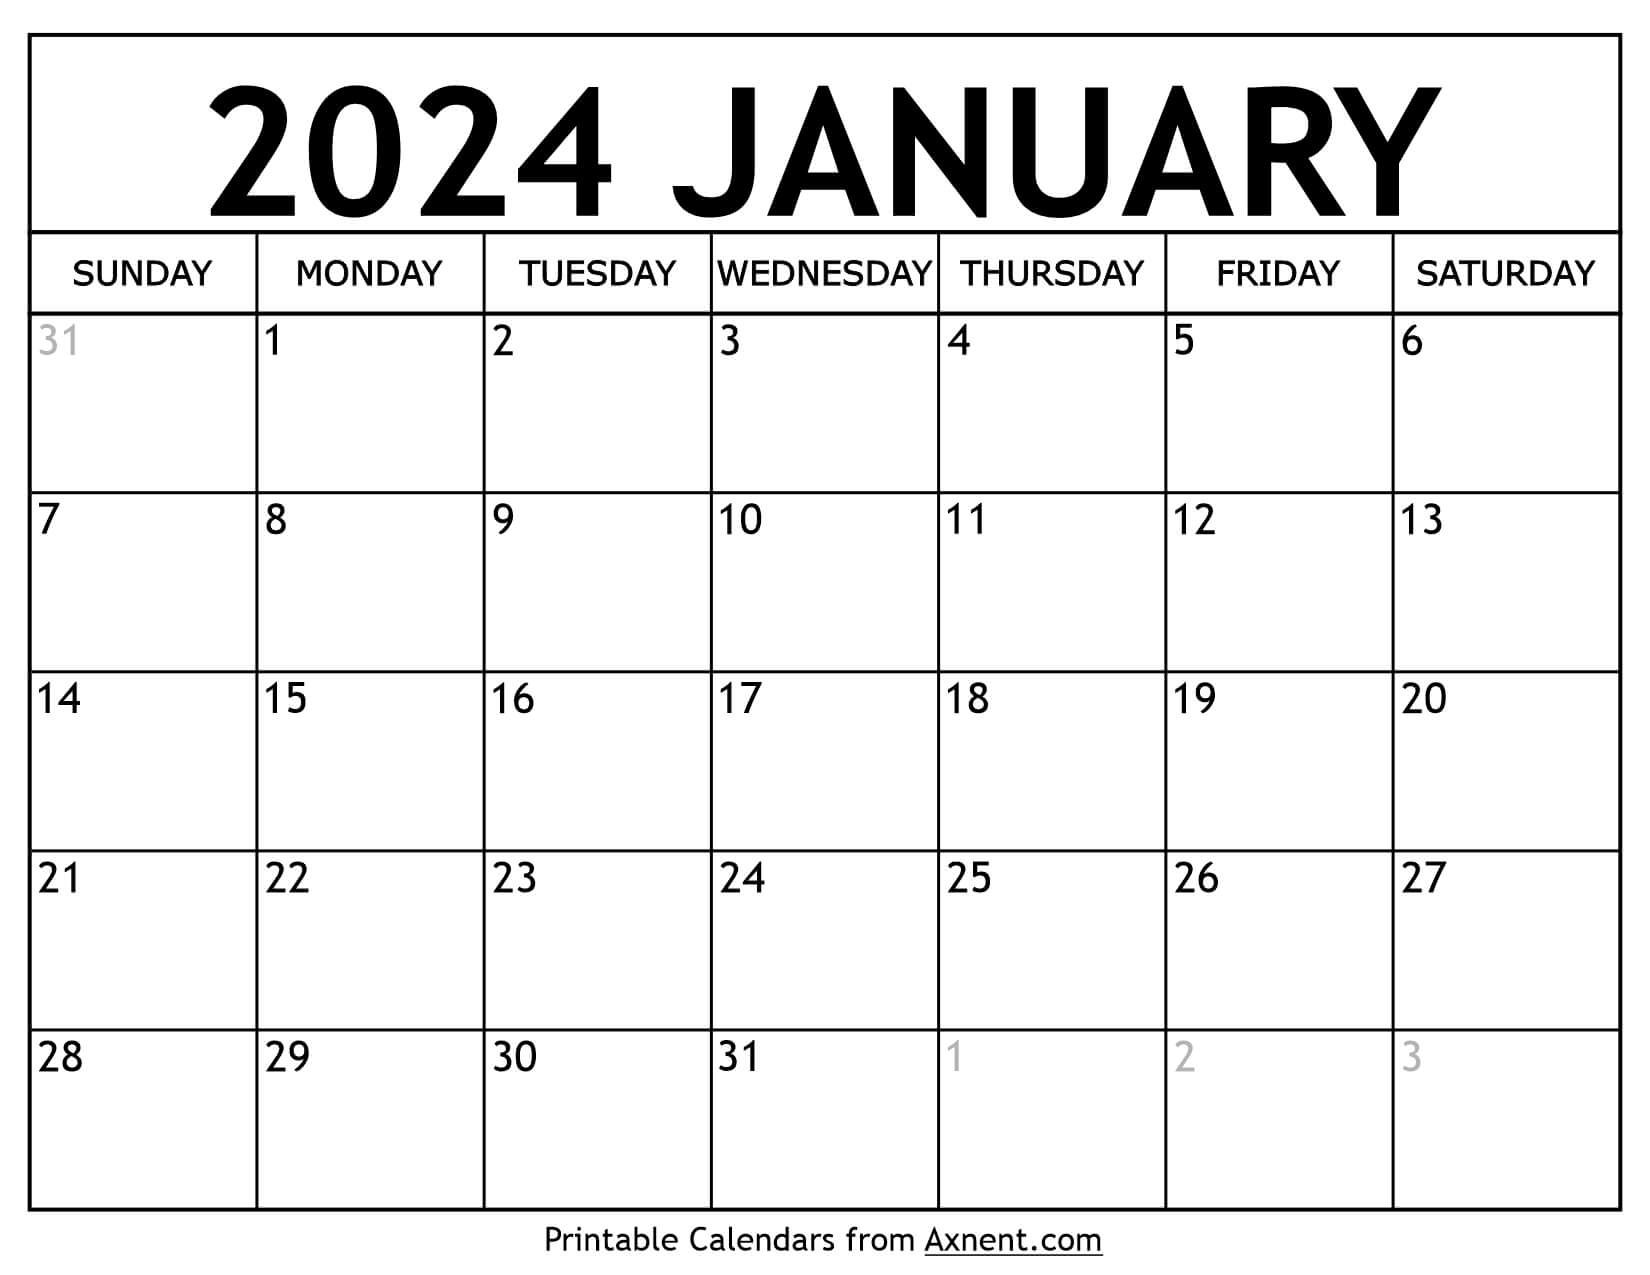 Printable January 2024 Calendar Template - Print Now for January 2024 Weekly Calendar Printable